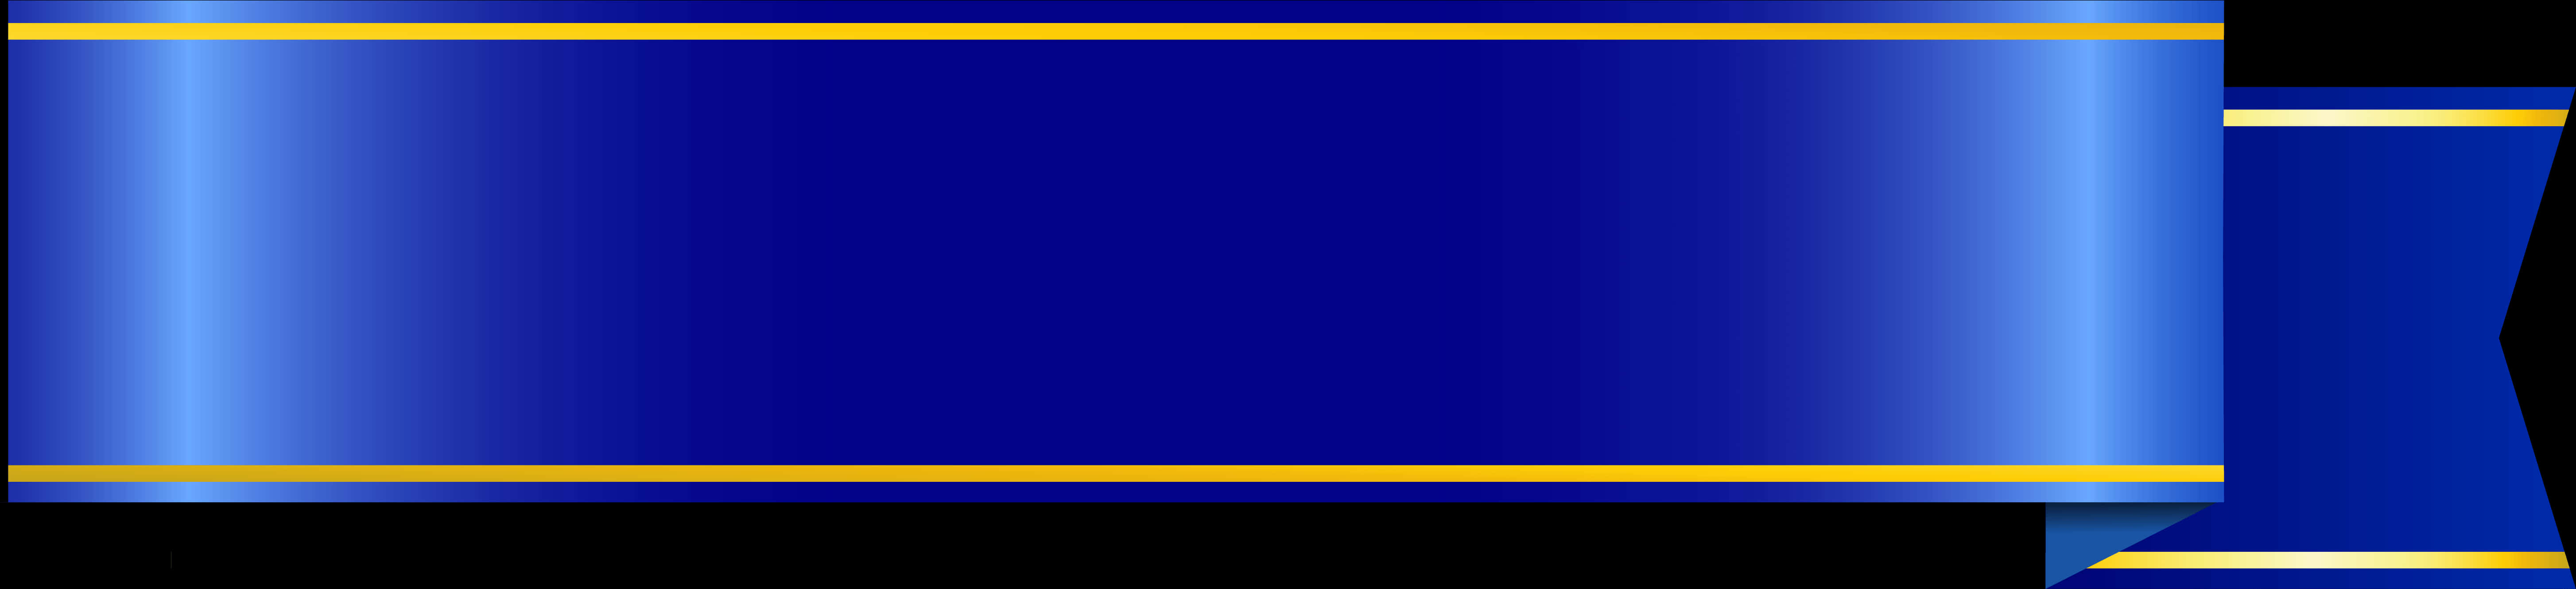 Banner Ribbon Royal Blue